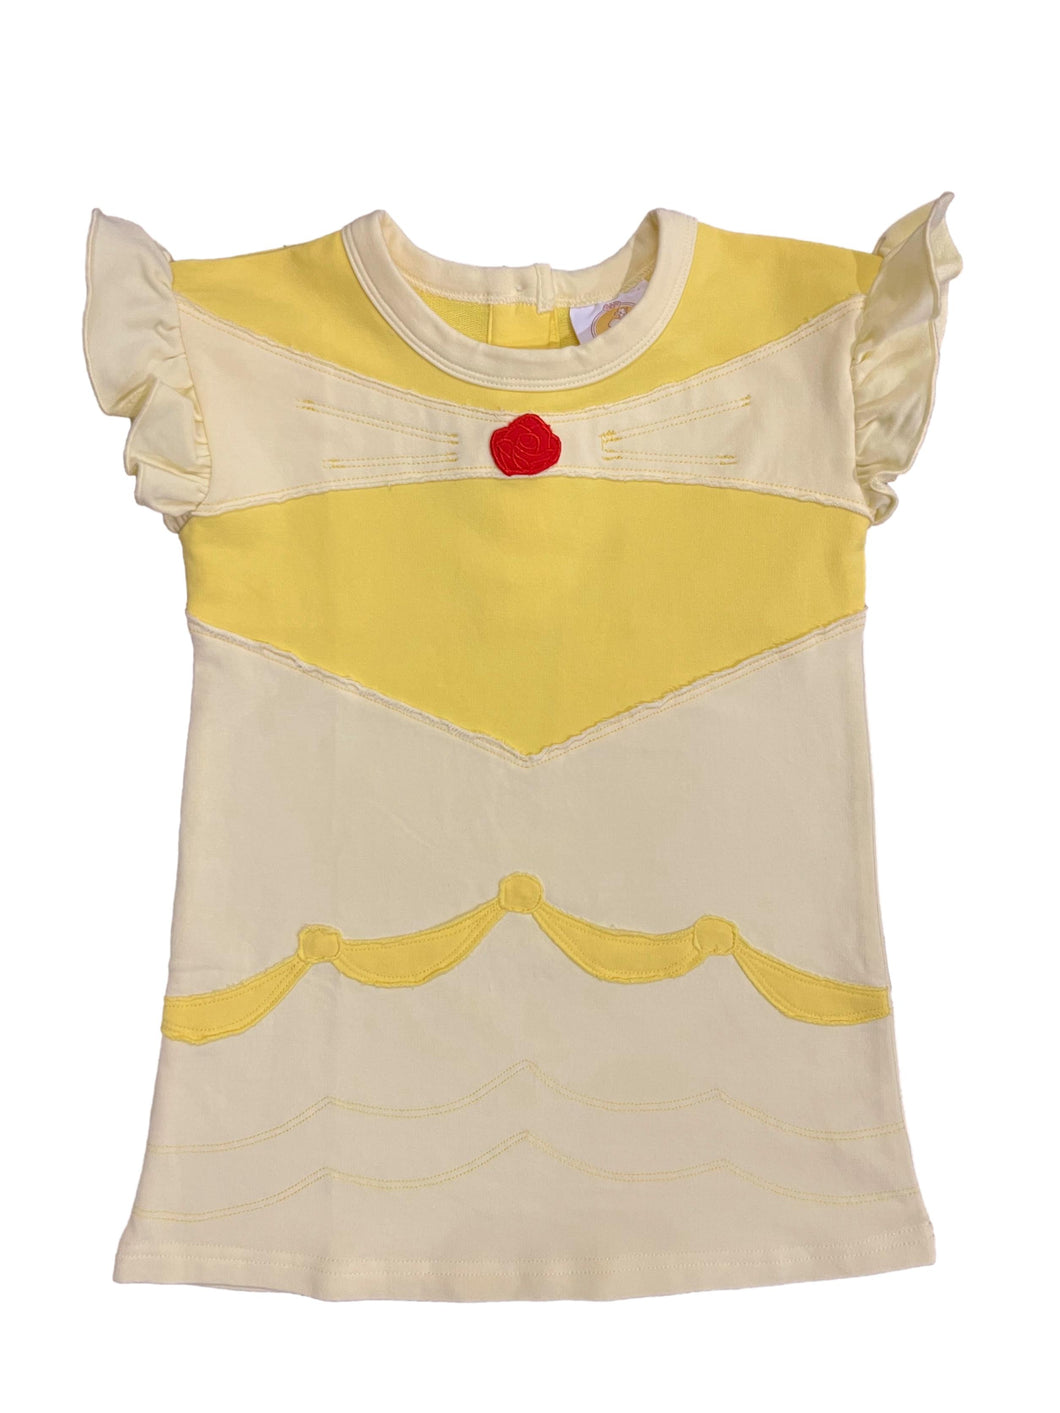 Princess Playdress- Yellow Angel Wing Sleeve